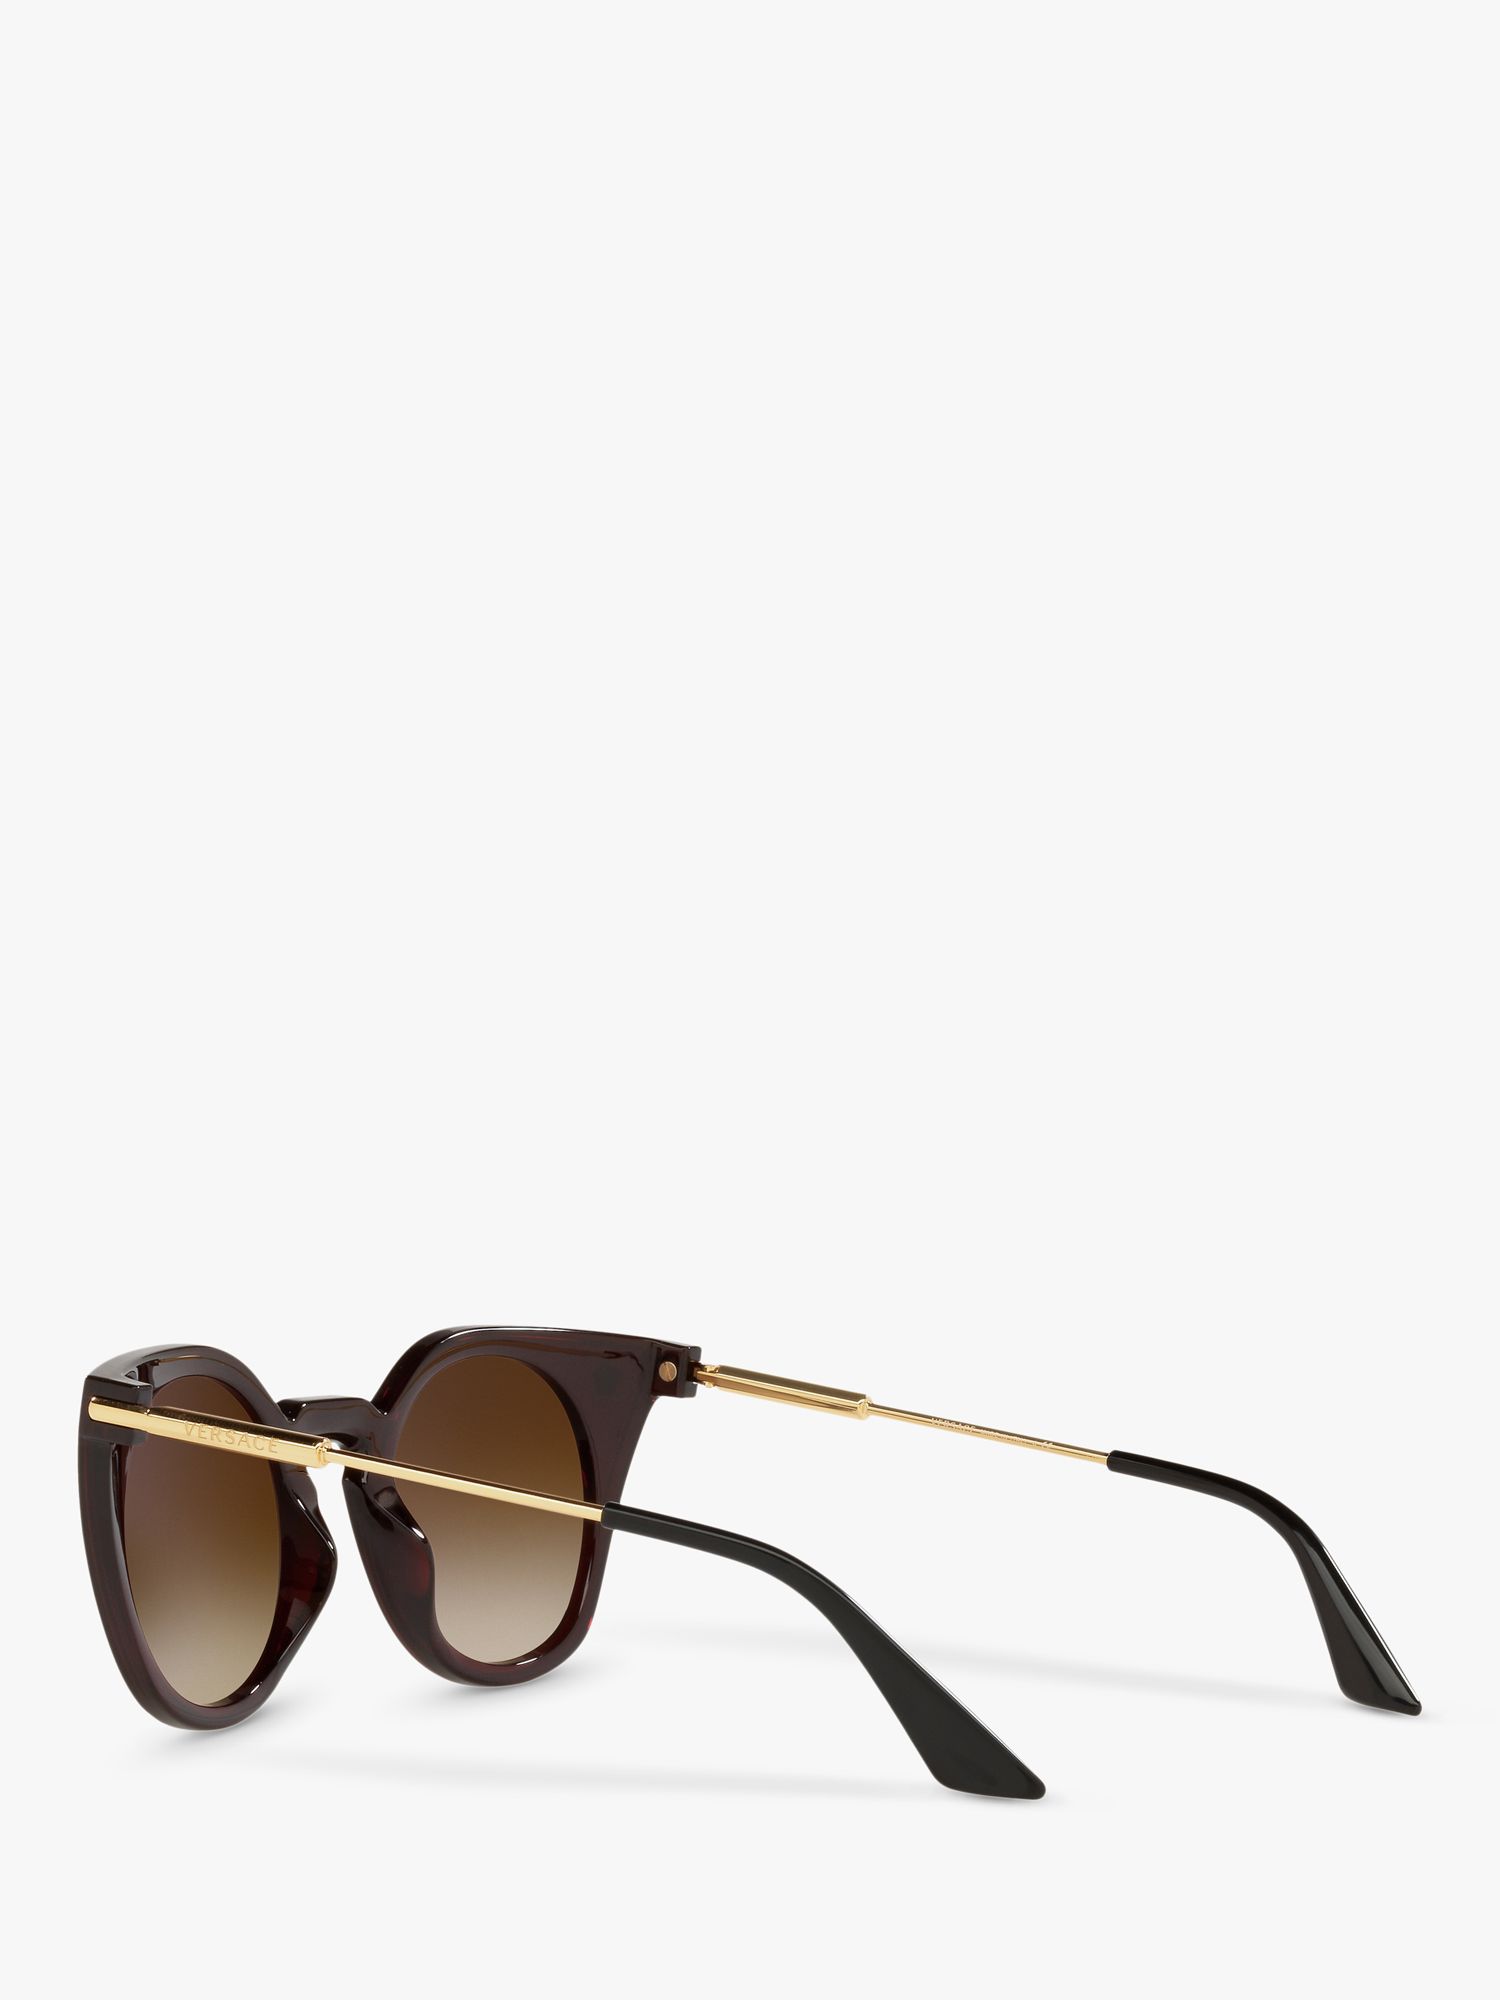 Versace VE4410 Women's Cat's Eye Sunglasses, Dark Red/Brown Gradient at ...